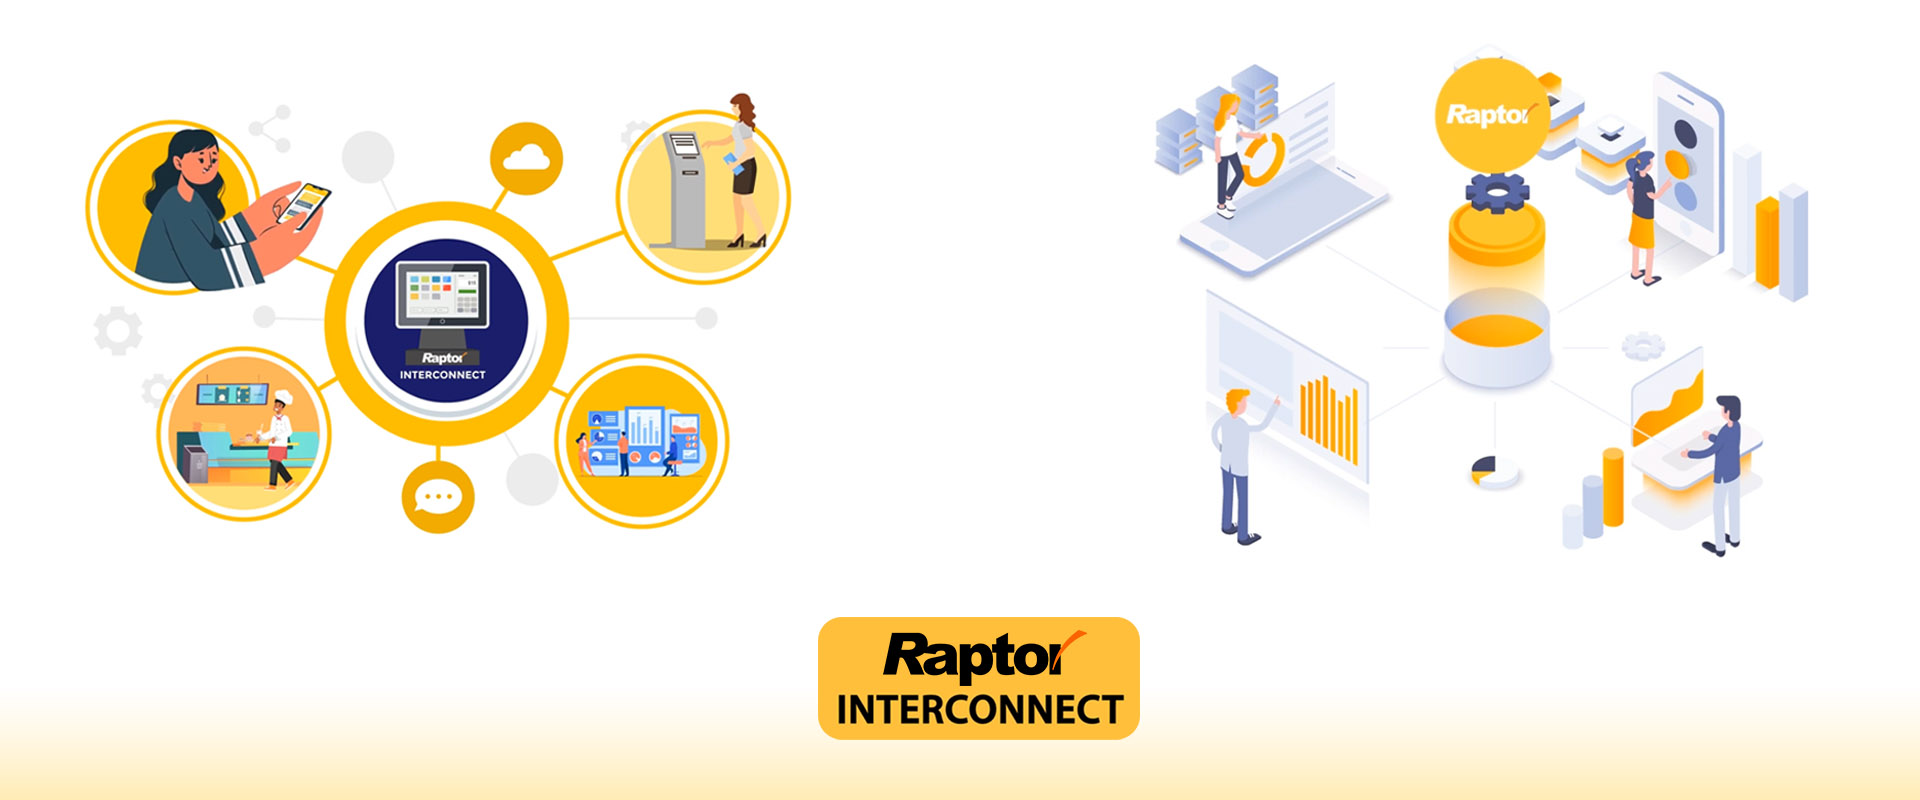 Raptor Interconnect